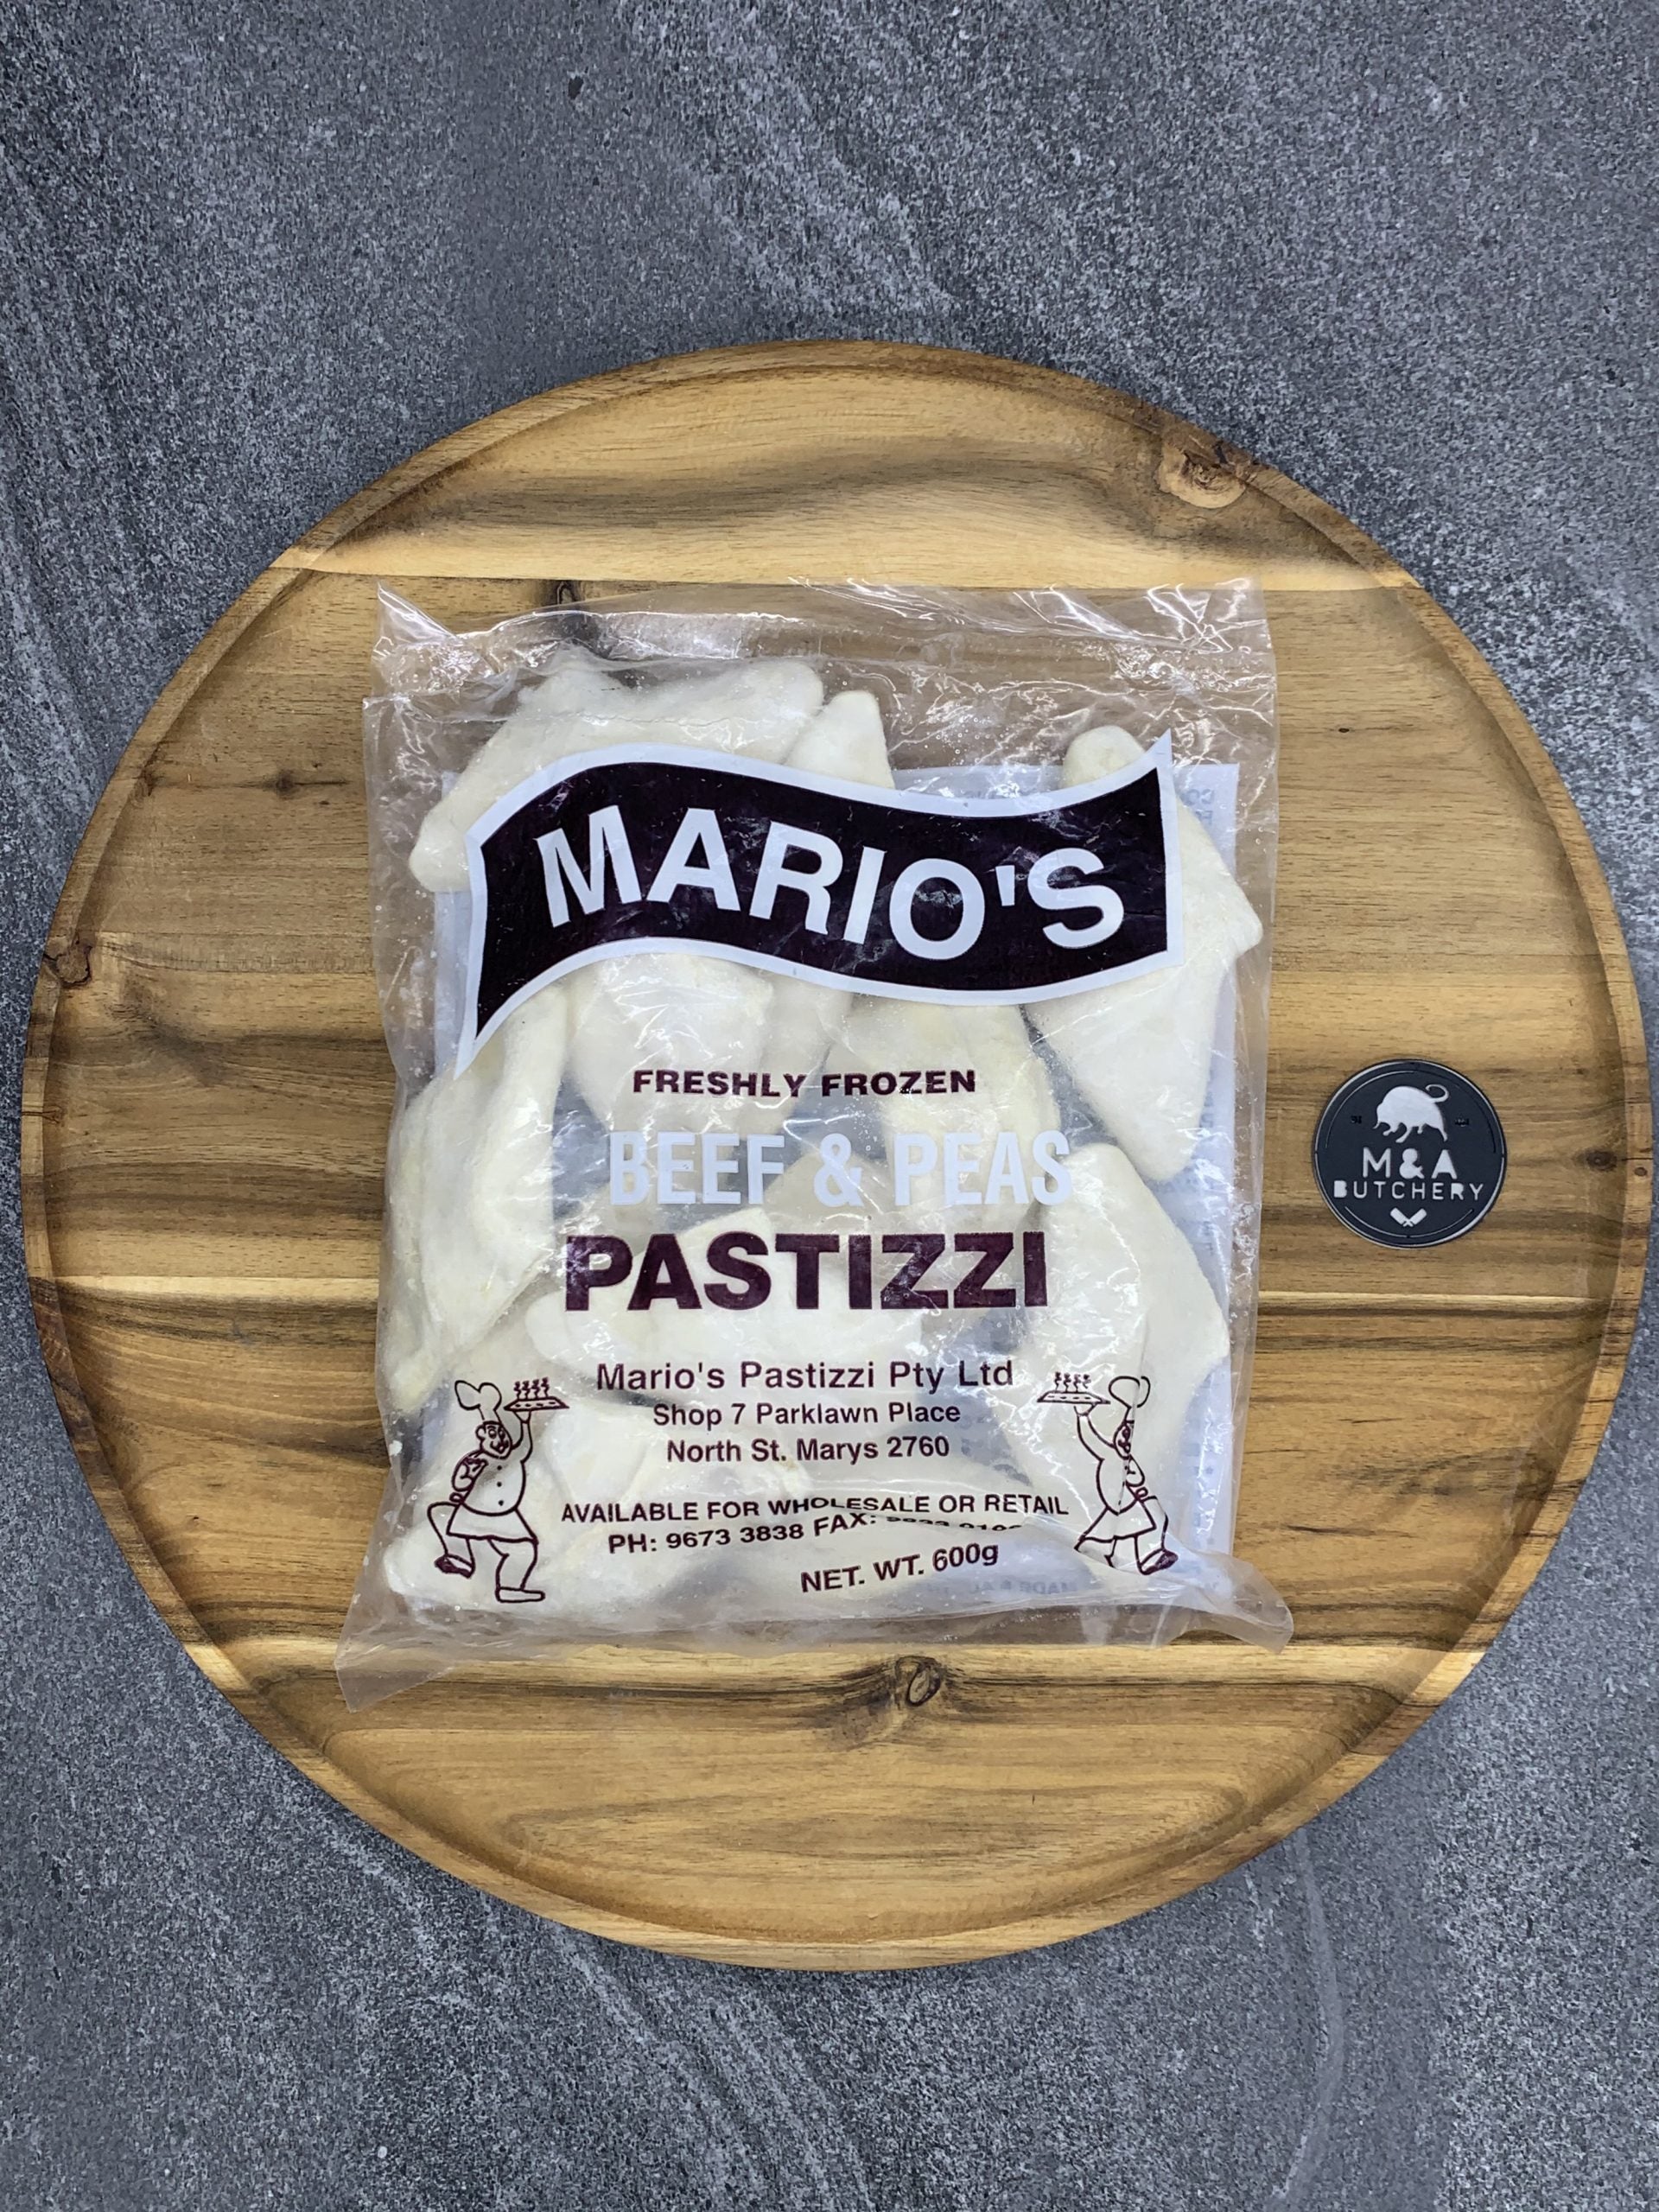 Mario's Beef and Peas Pastizzi